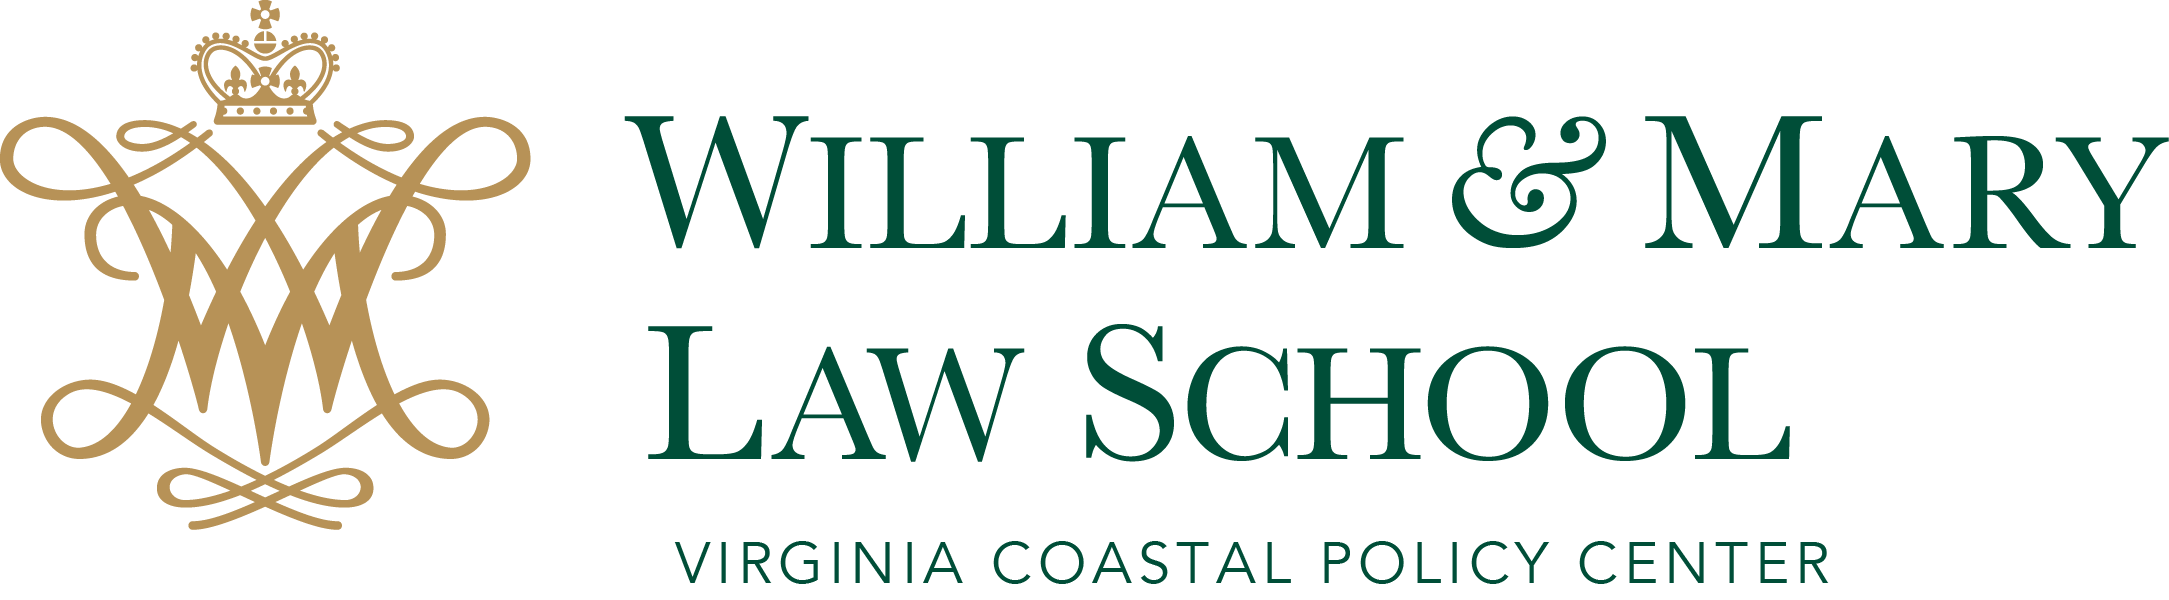 Virginia Coastal Policy Center